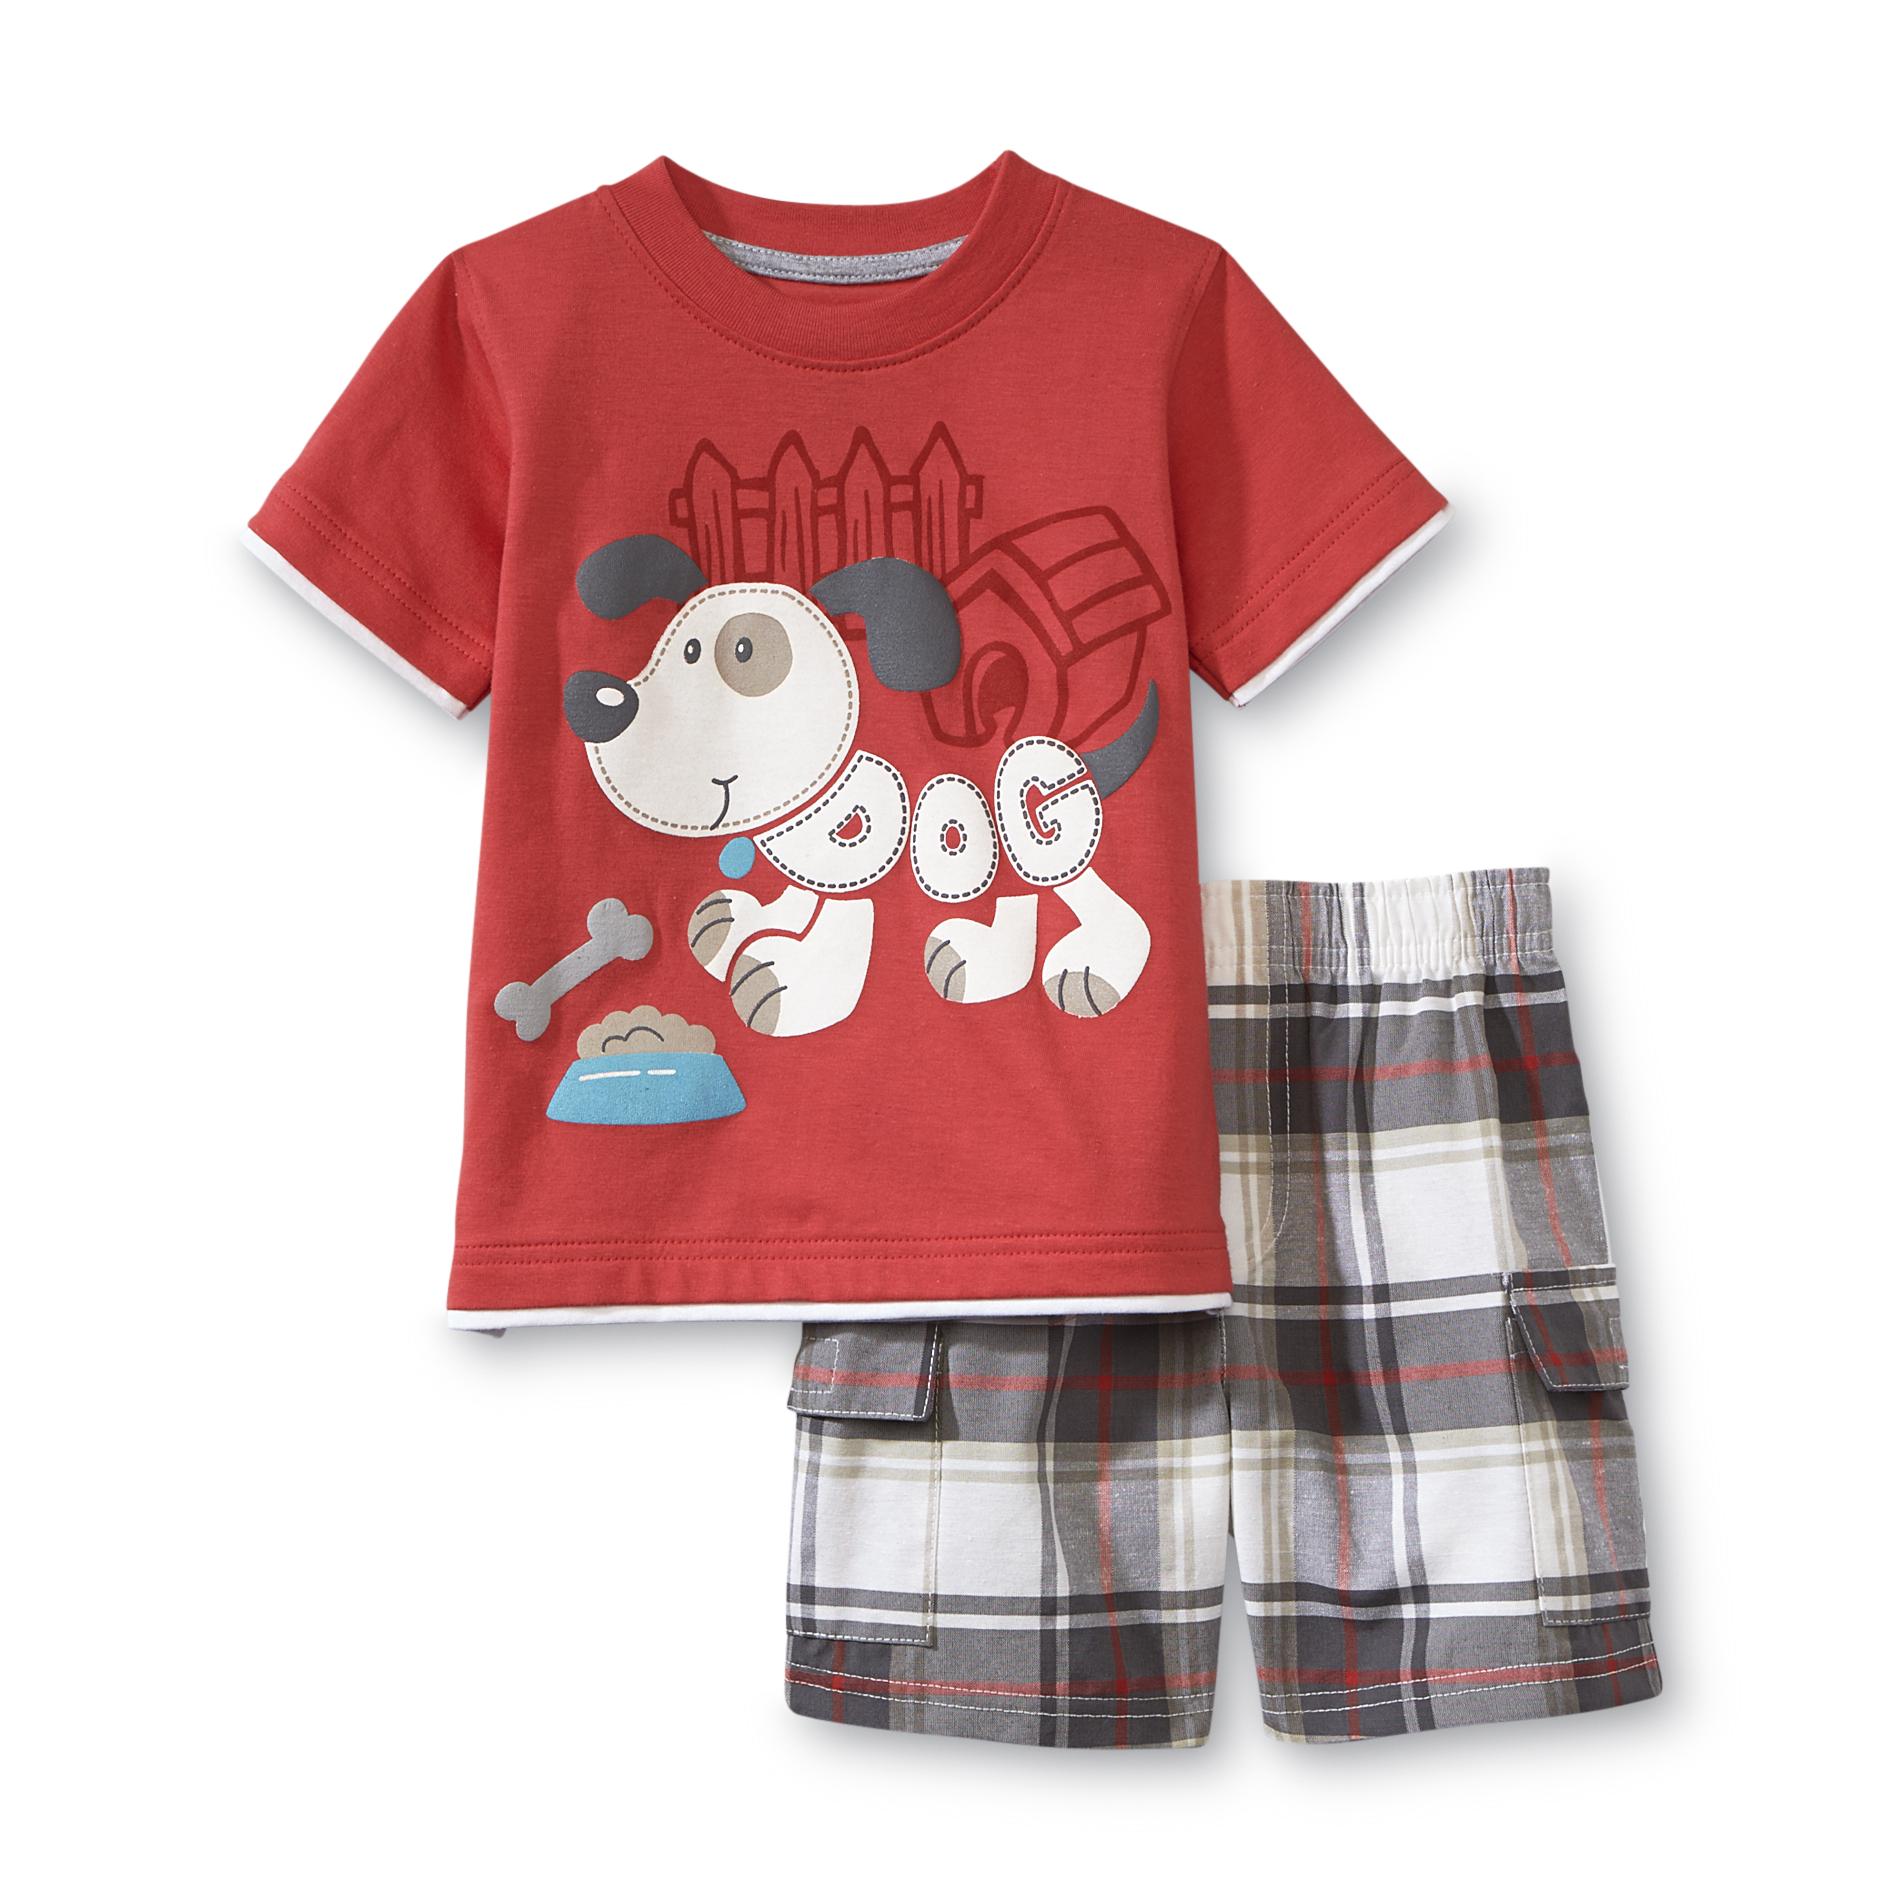 Kids Headquarters Infant & Toddler Boy's Graphic T-Shirt & Plaid Shorts - Dog